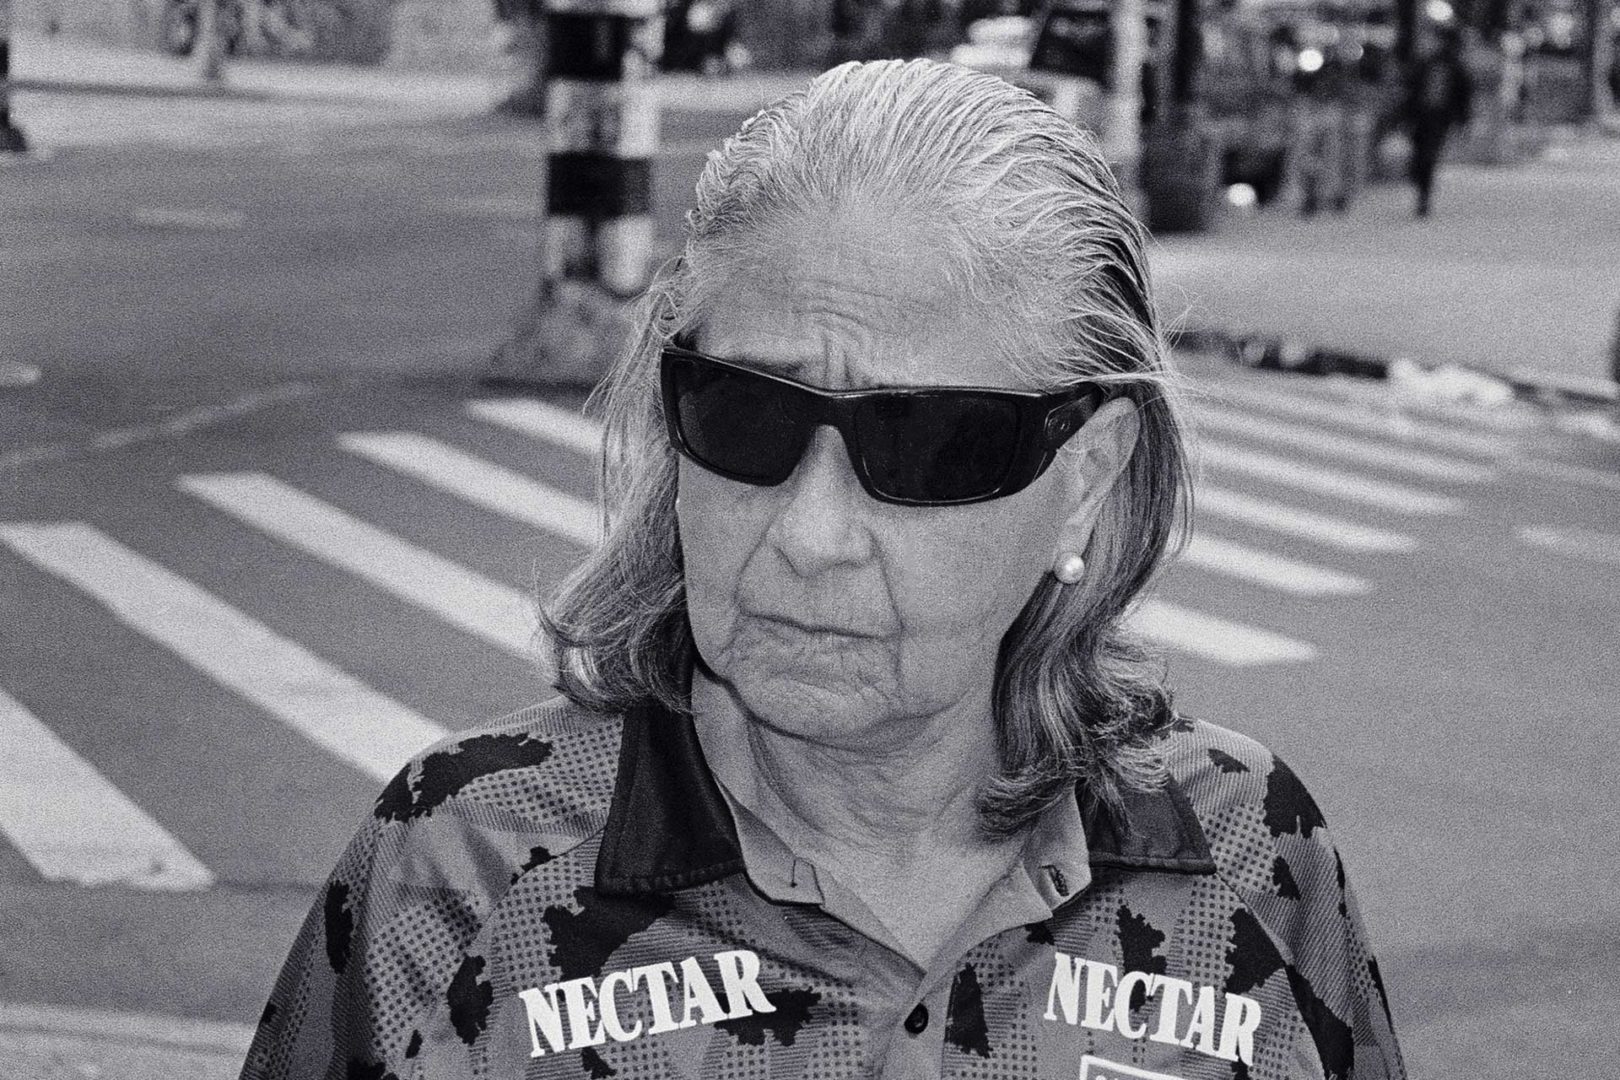 Mateo Arciniegas portraying her mother in New York, ‘Nuestra Nueva York’